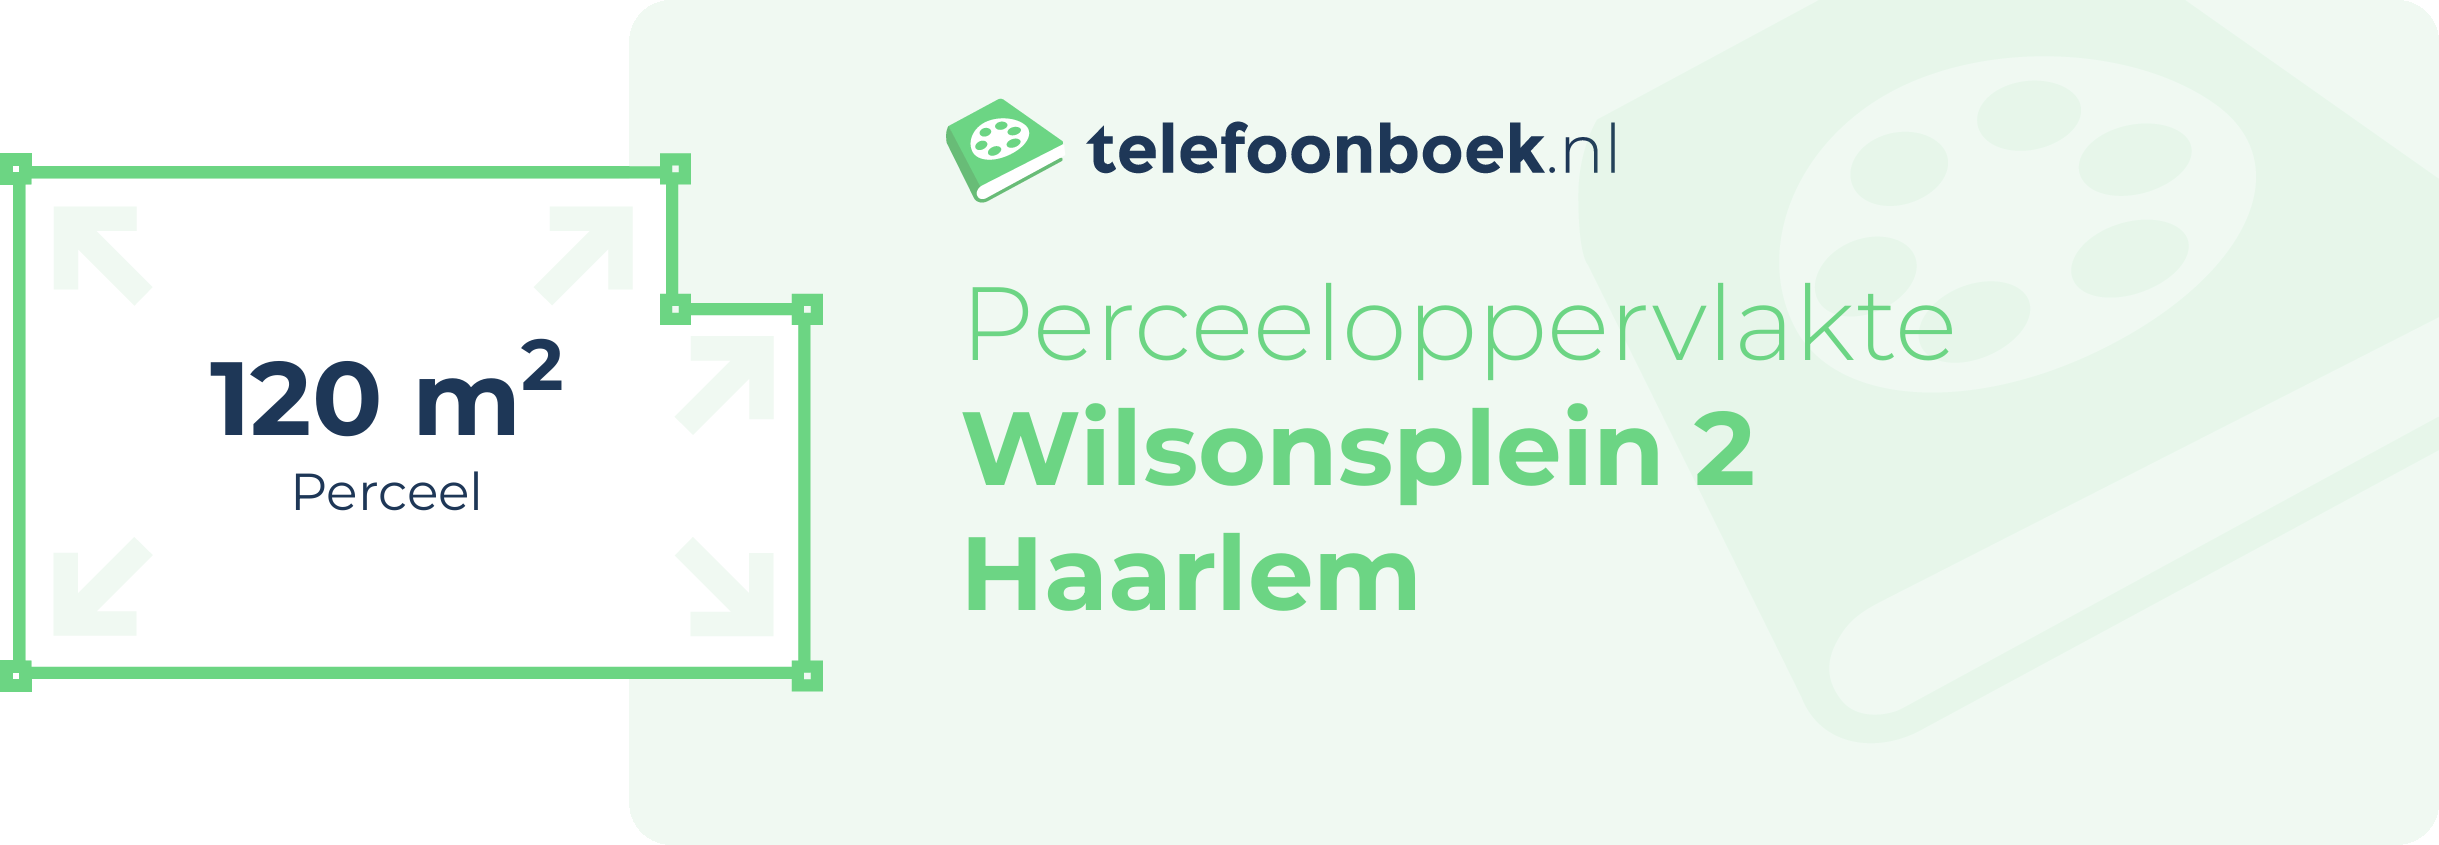 Perceeloppervlakte Wilsonsplein 2 Haarlem